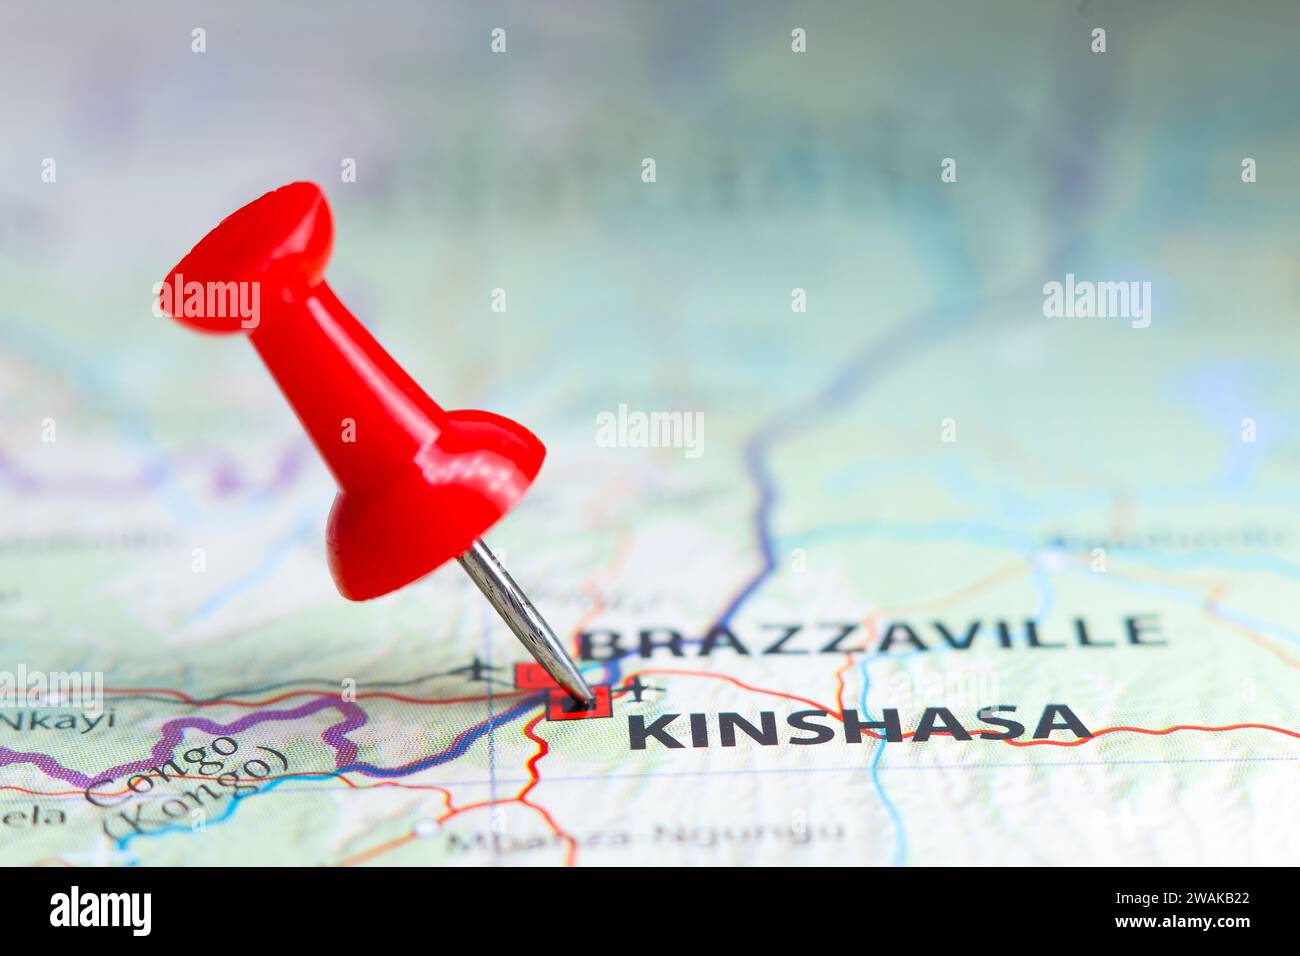 Kinshasa, Congo pin on map Stock Photo